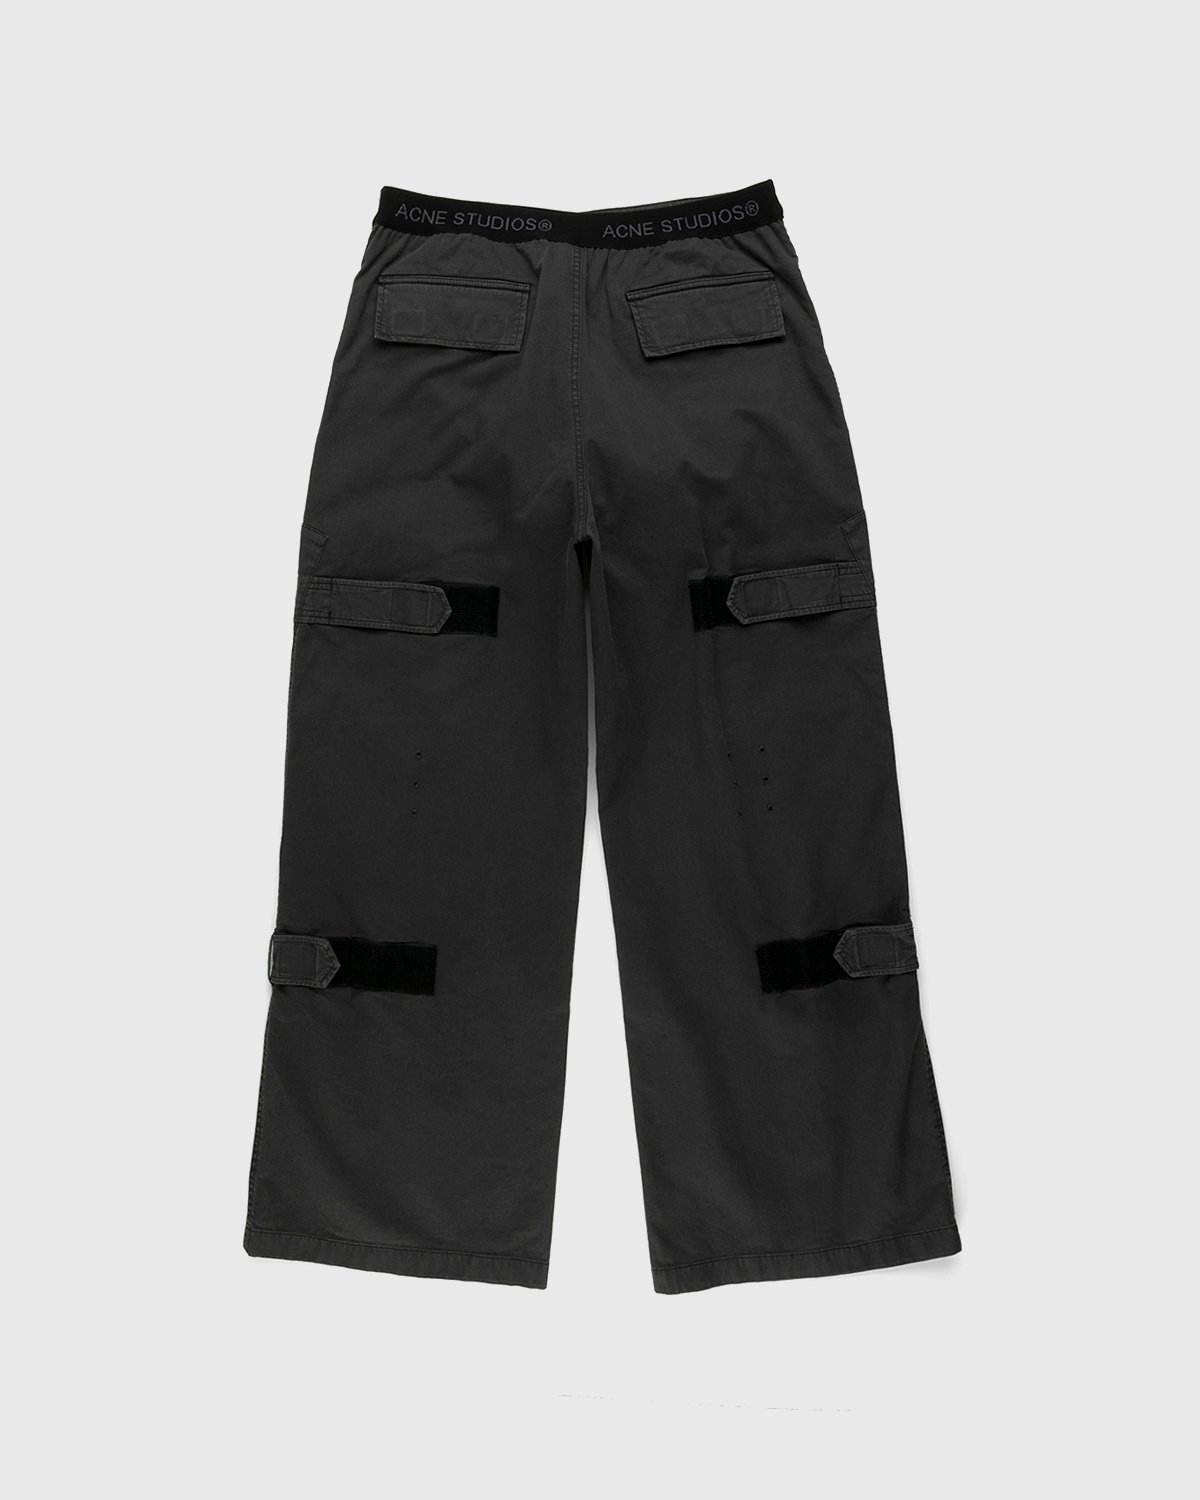 Acne Studios - Chevron Cargo Pants Anthracite Grey - Clothing - Grey - Image 2